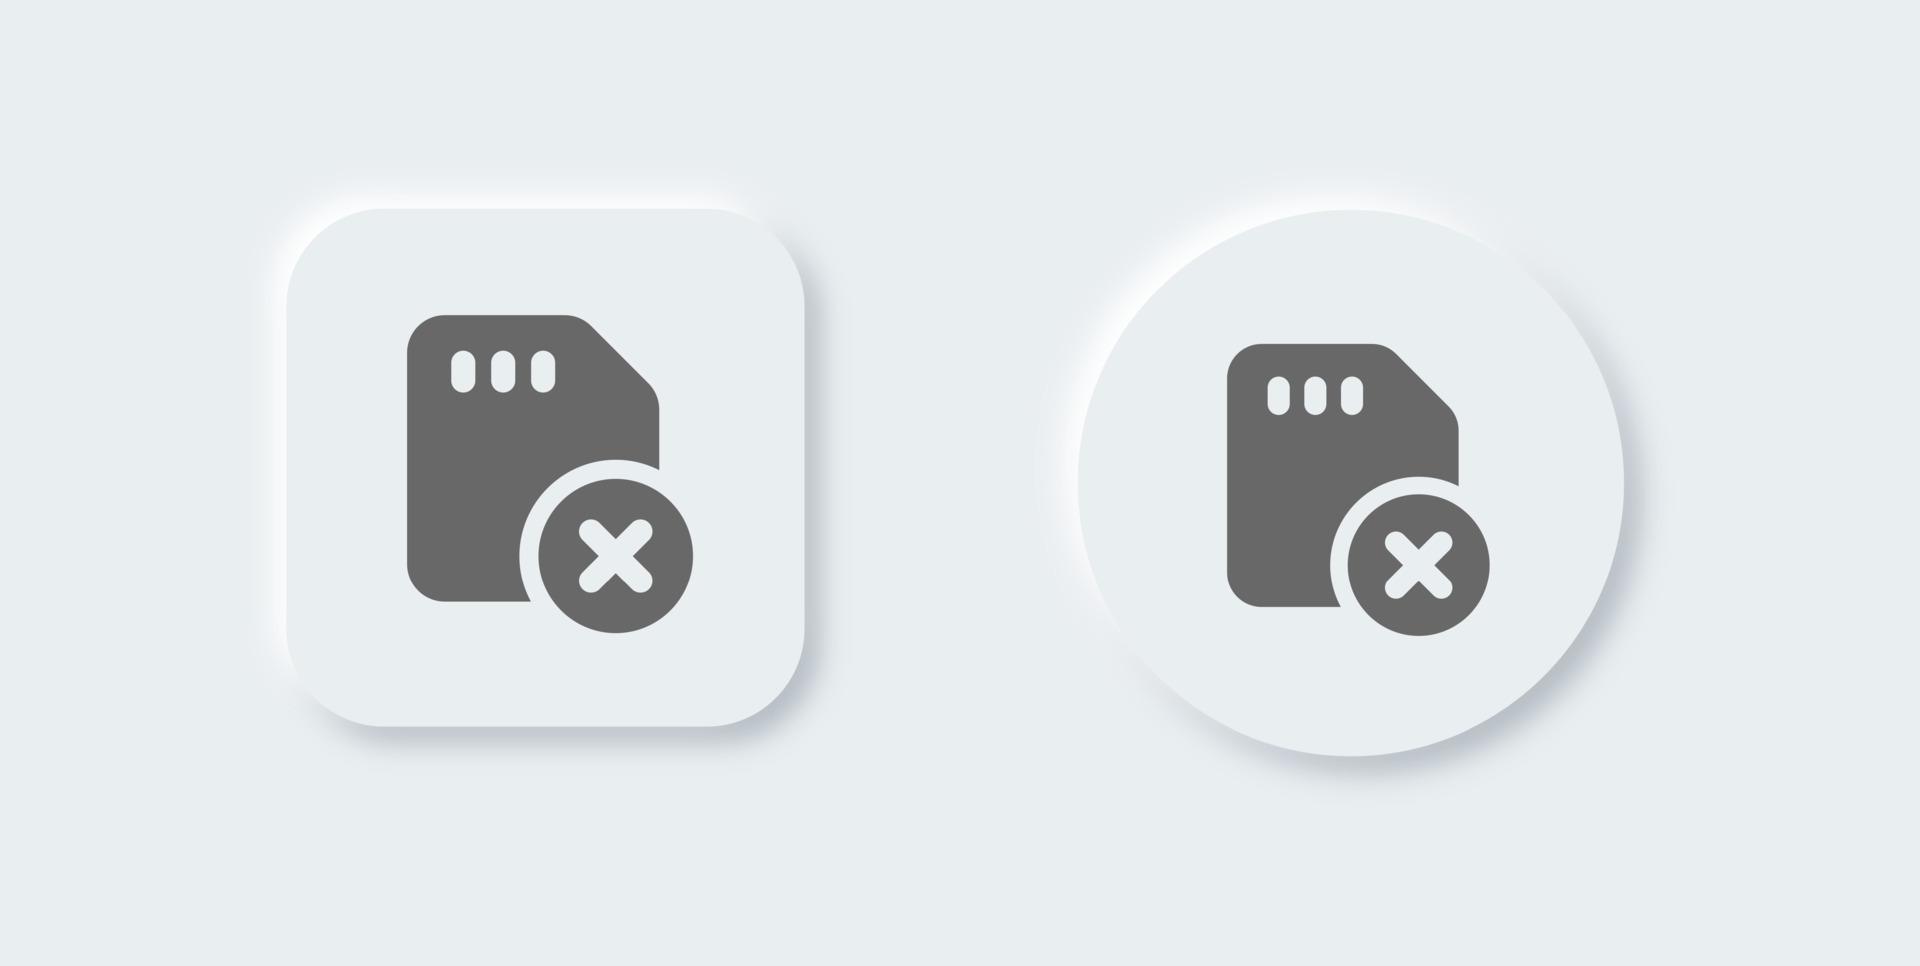 Delete solid icon in neomorphic designs style. Remove signs vector illustration.